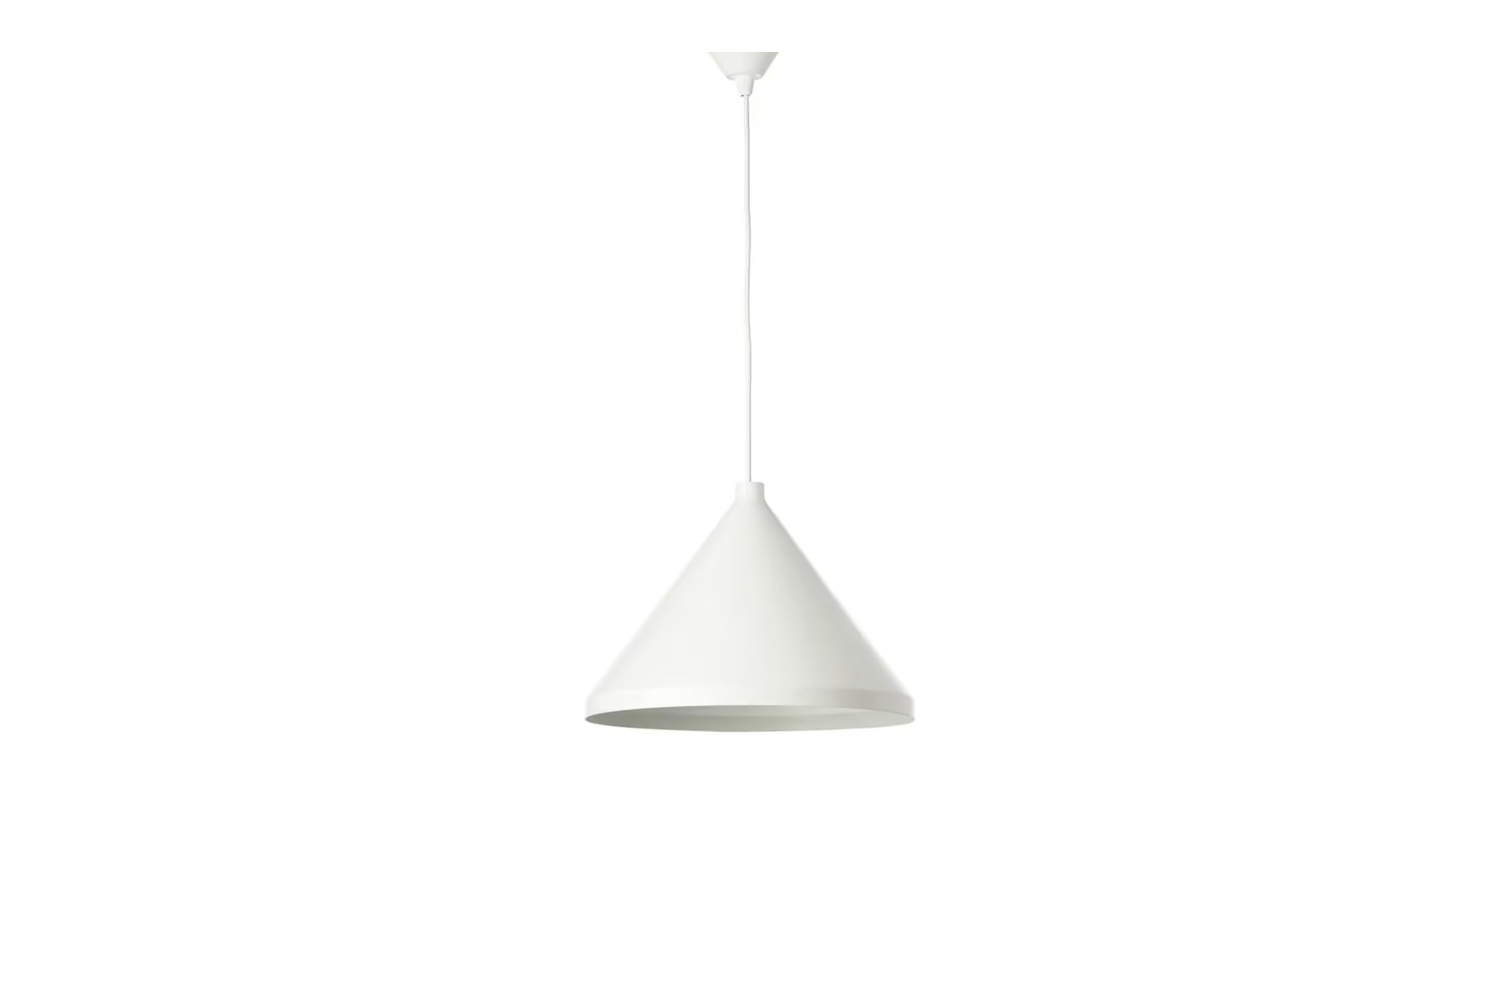 the ikea navlinge pendant lamp in white is \$\14.99. 20